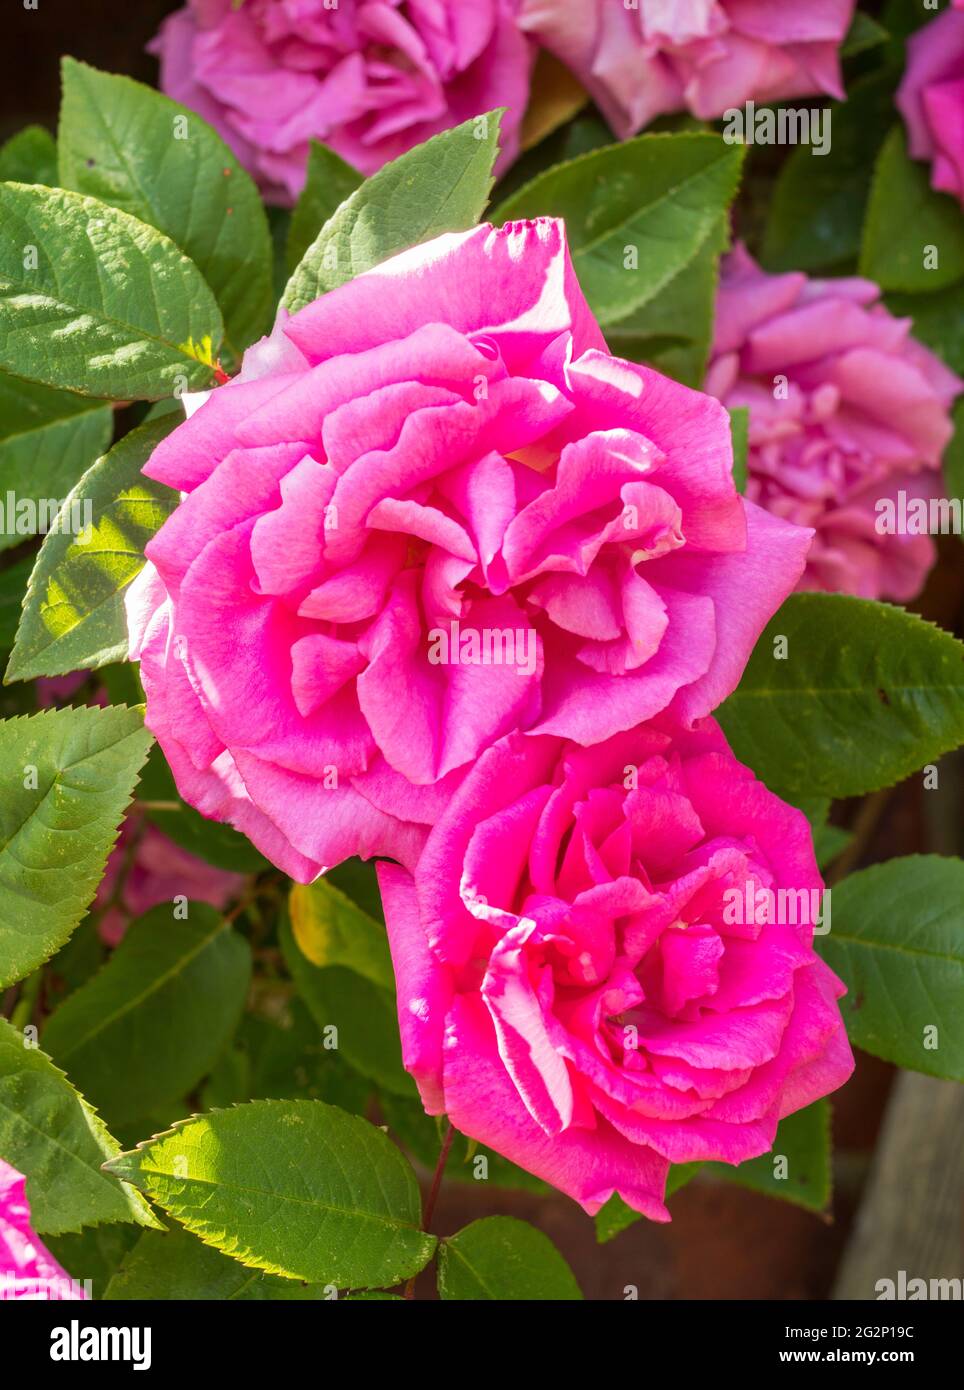 Flowers of the pink thornless climbing rose Zephirine Drouhin, England UK Stock Photo